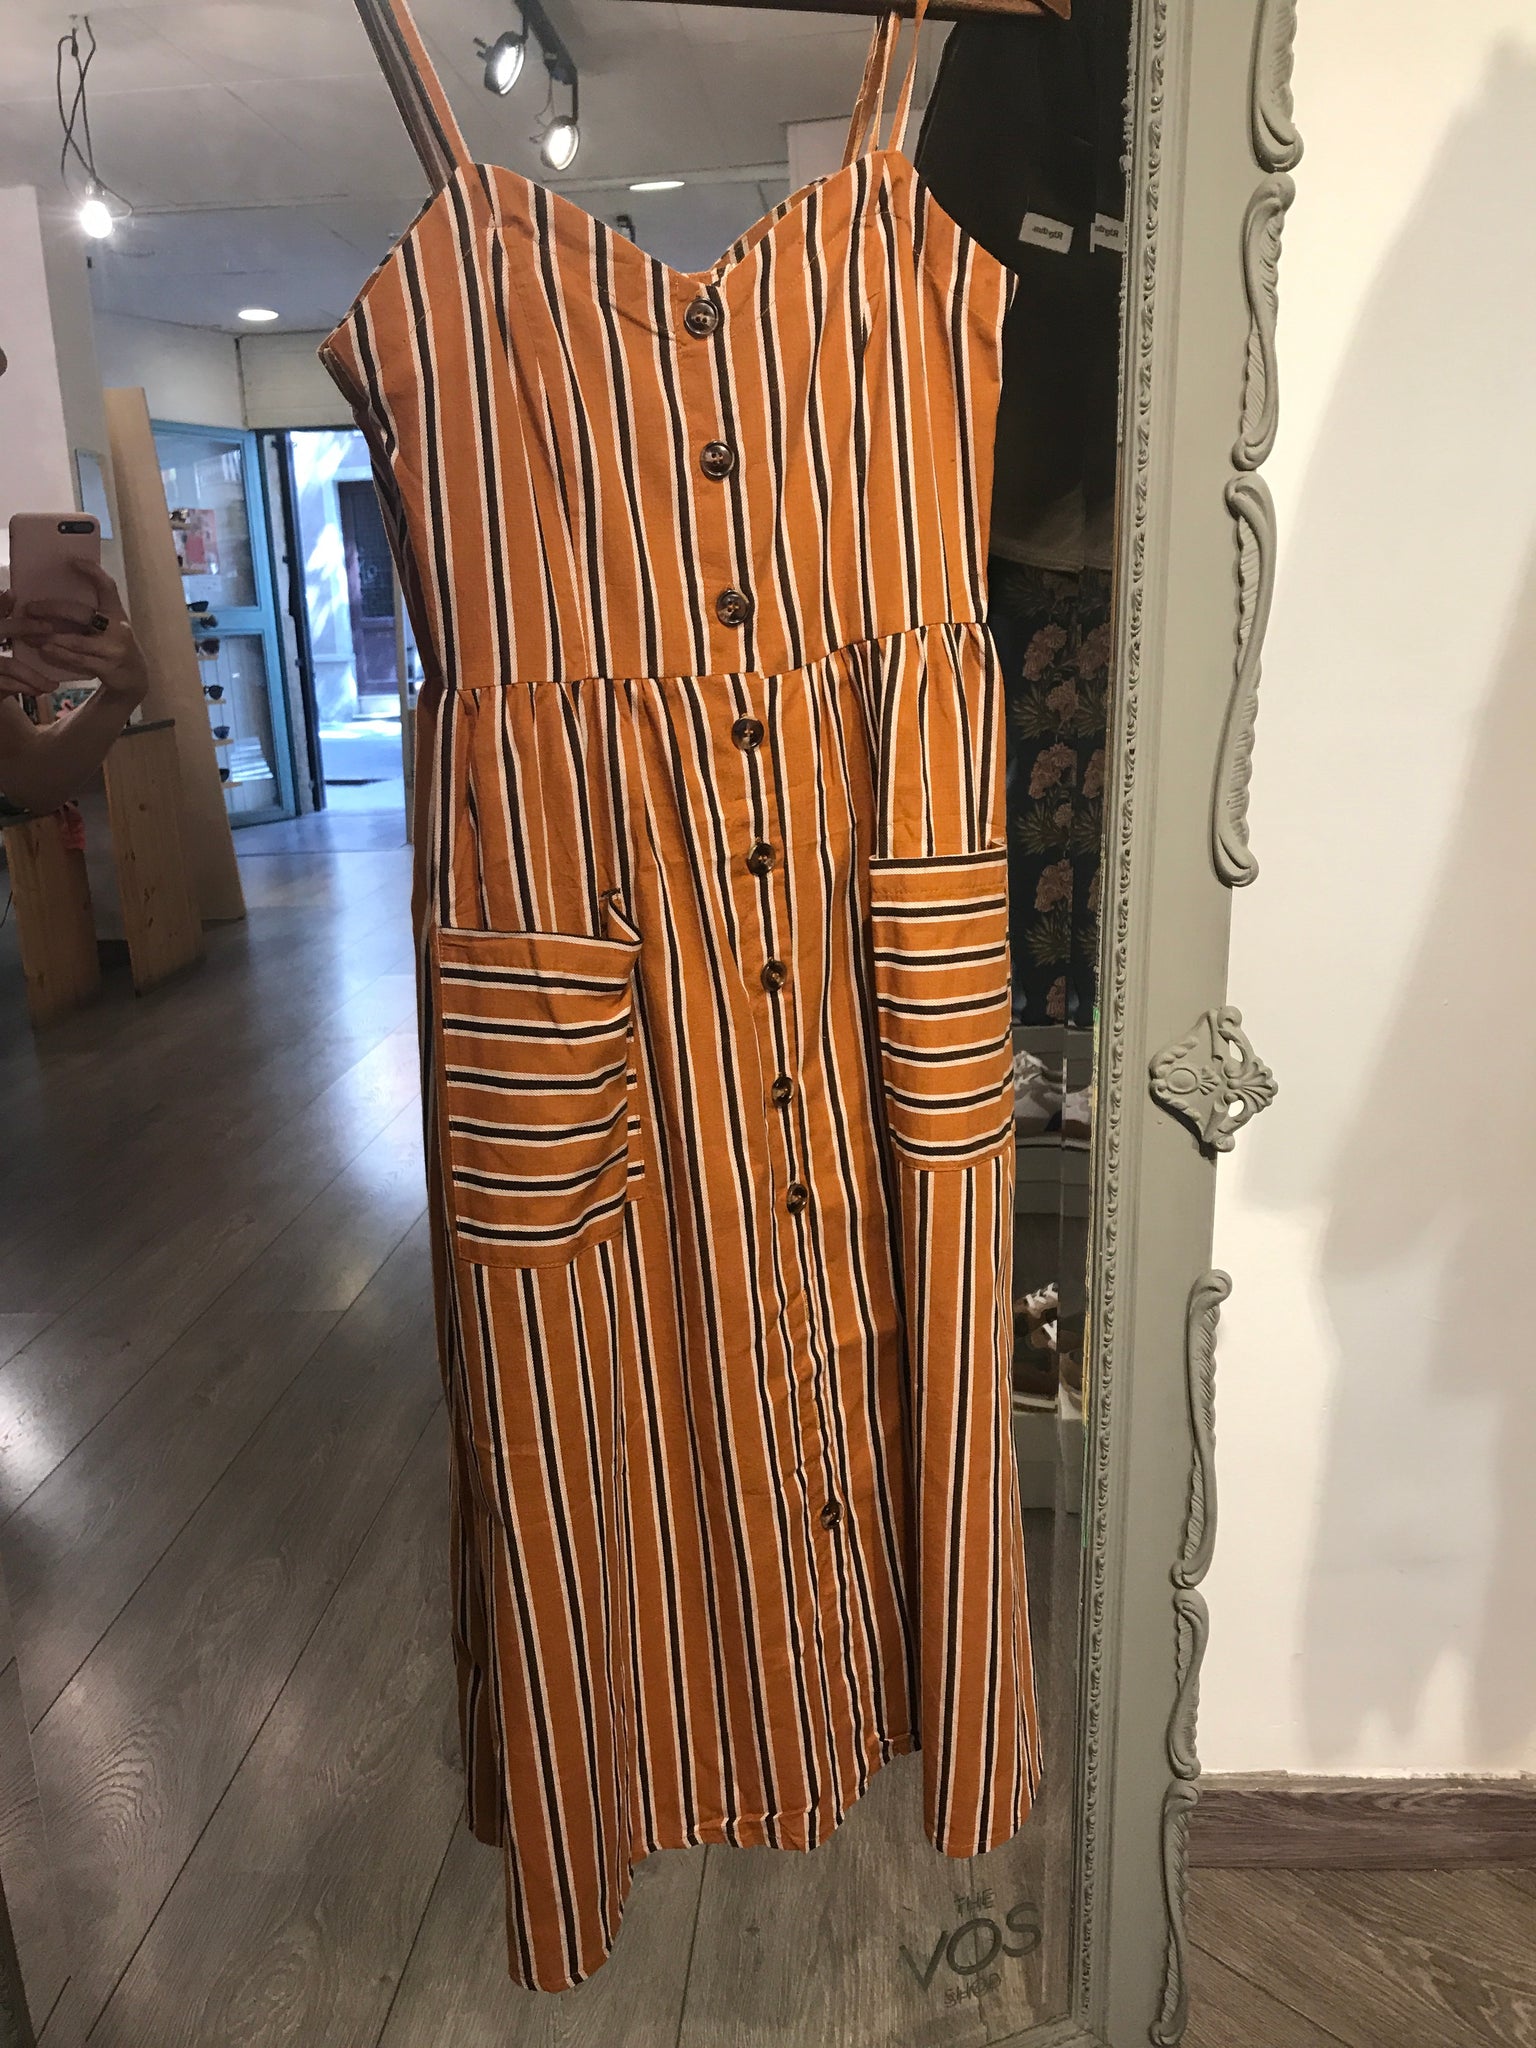 Charlior stripes dress